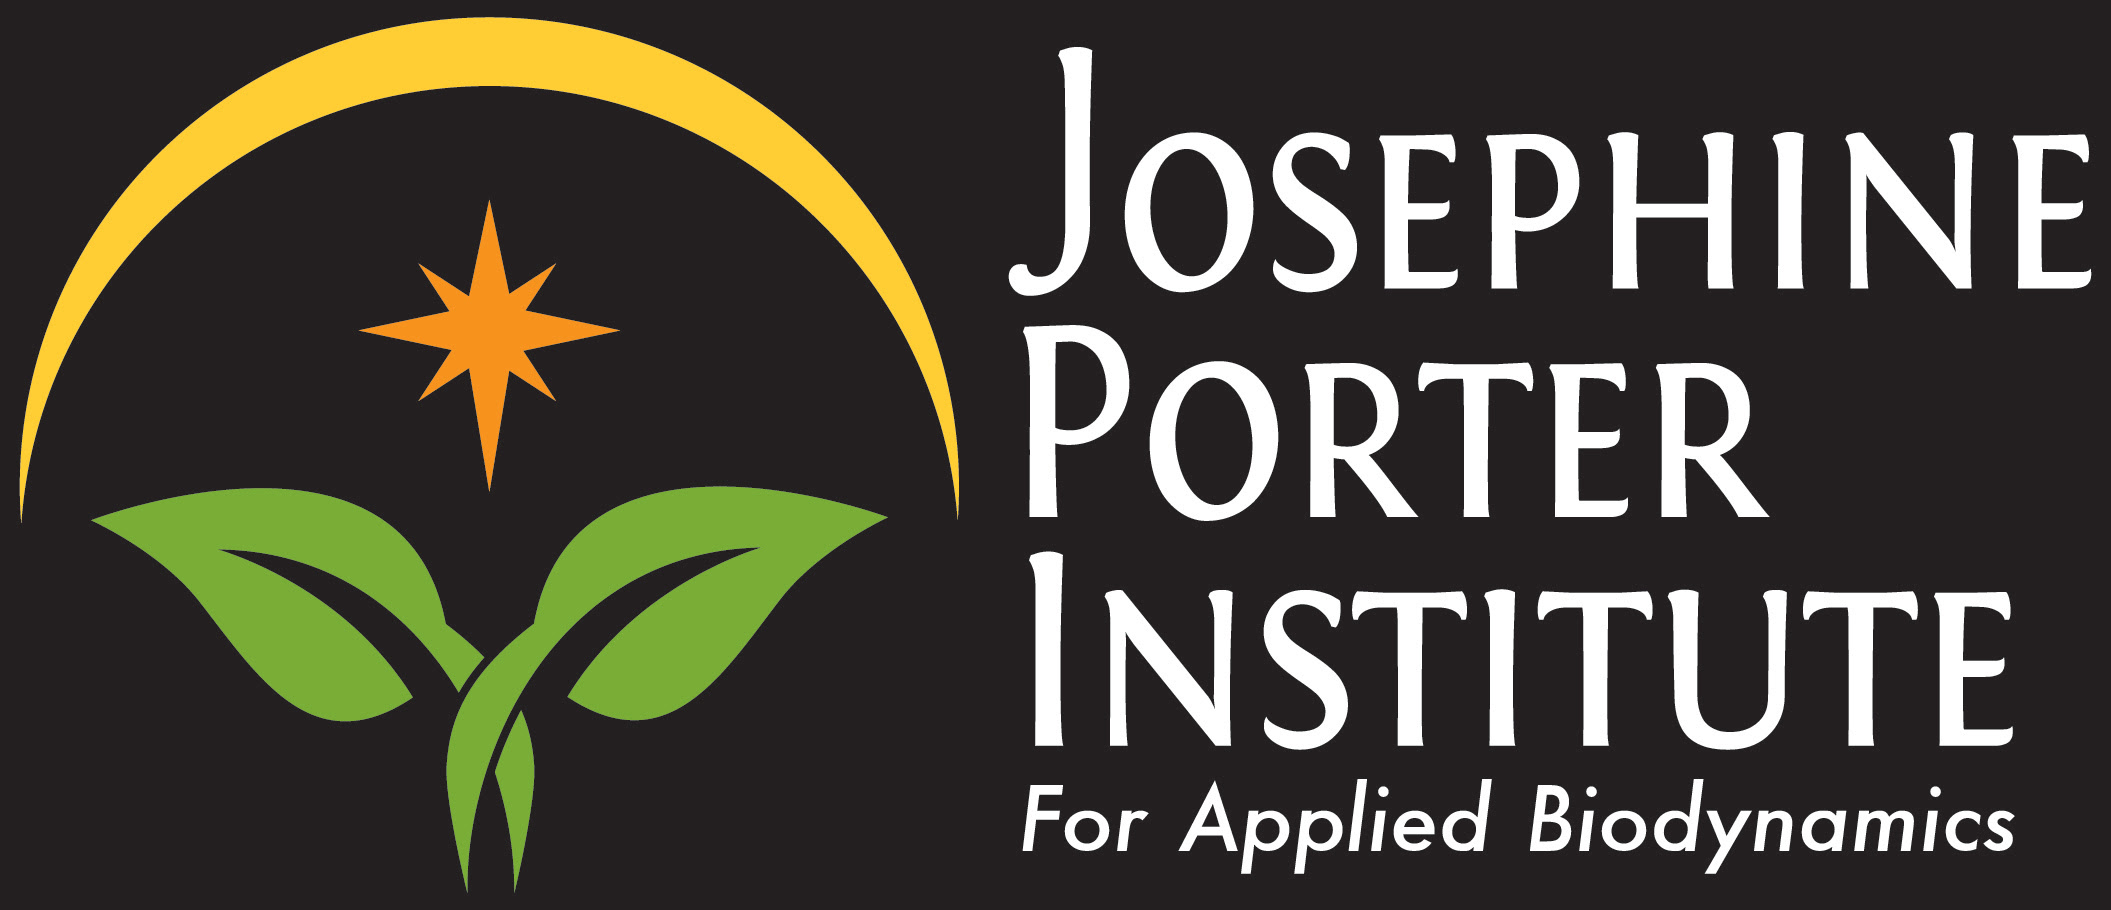 Josephine Porter Institute for Applied Biodynamics